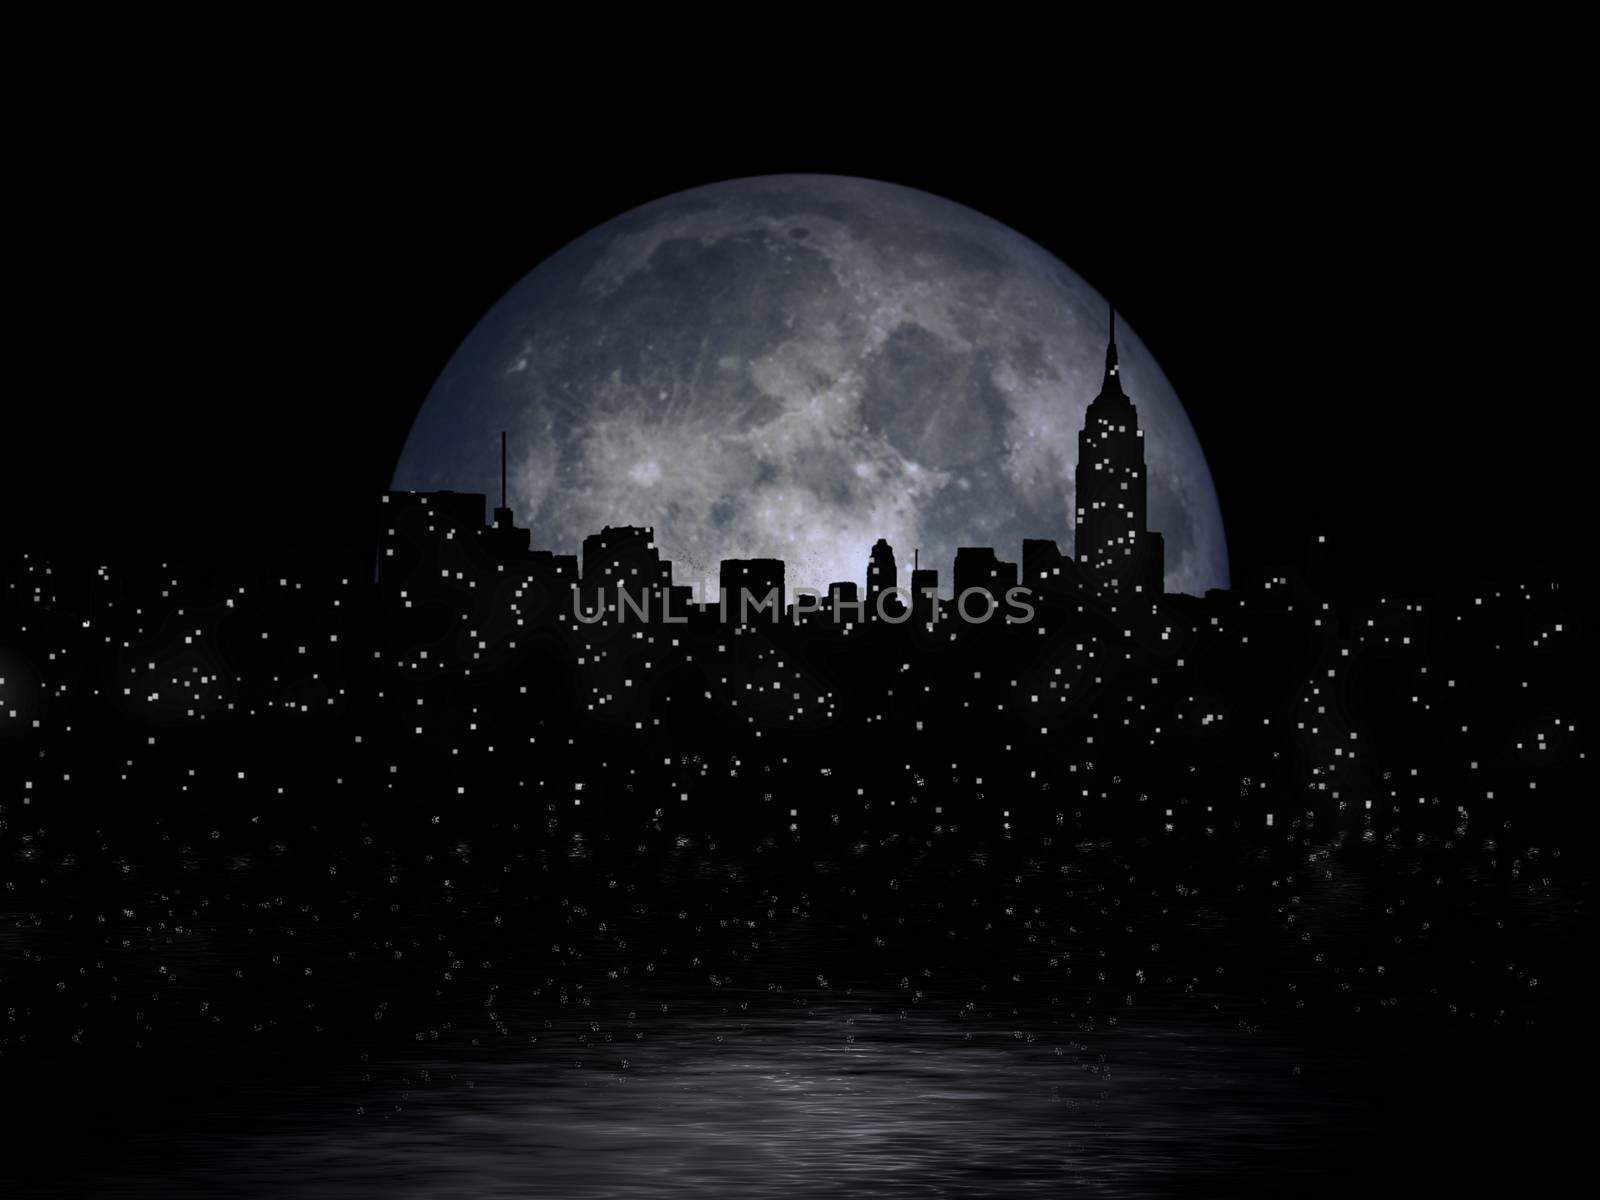 3D rendering. Full moon over night city